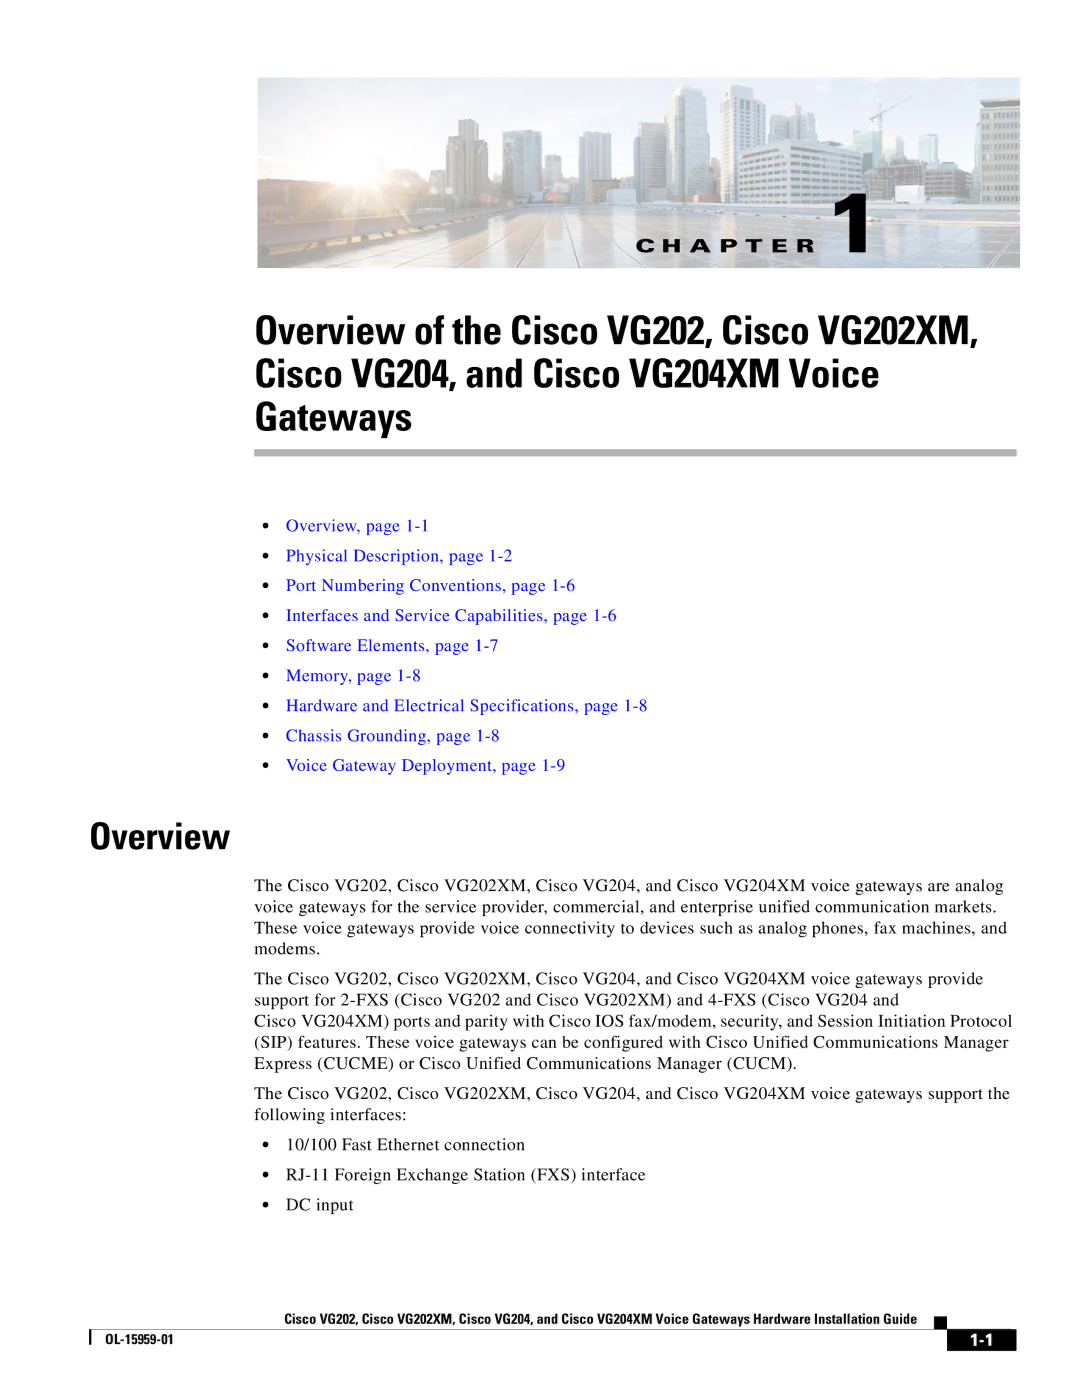 Cisco Systems VG202XM manual Cisco VG204, and Cisco VG204XM Voice Gateways, Overview 